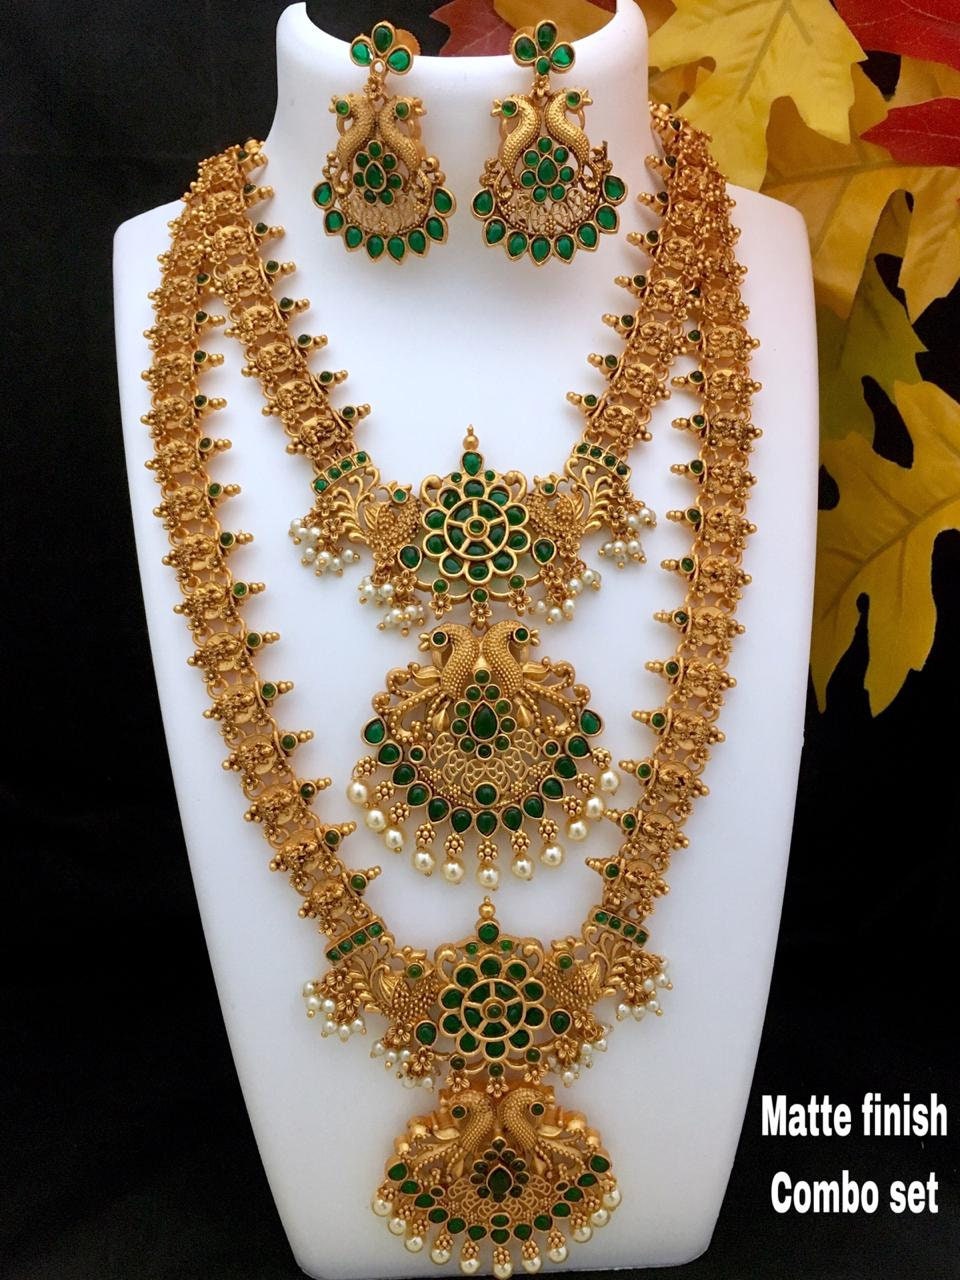 Temple jewelry Indian Wedding Jewelry| Kemp Stones South Indian Jewelry Bridal Temple Jewelry Matte finish Indian gold Jewelry Set